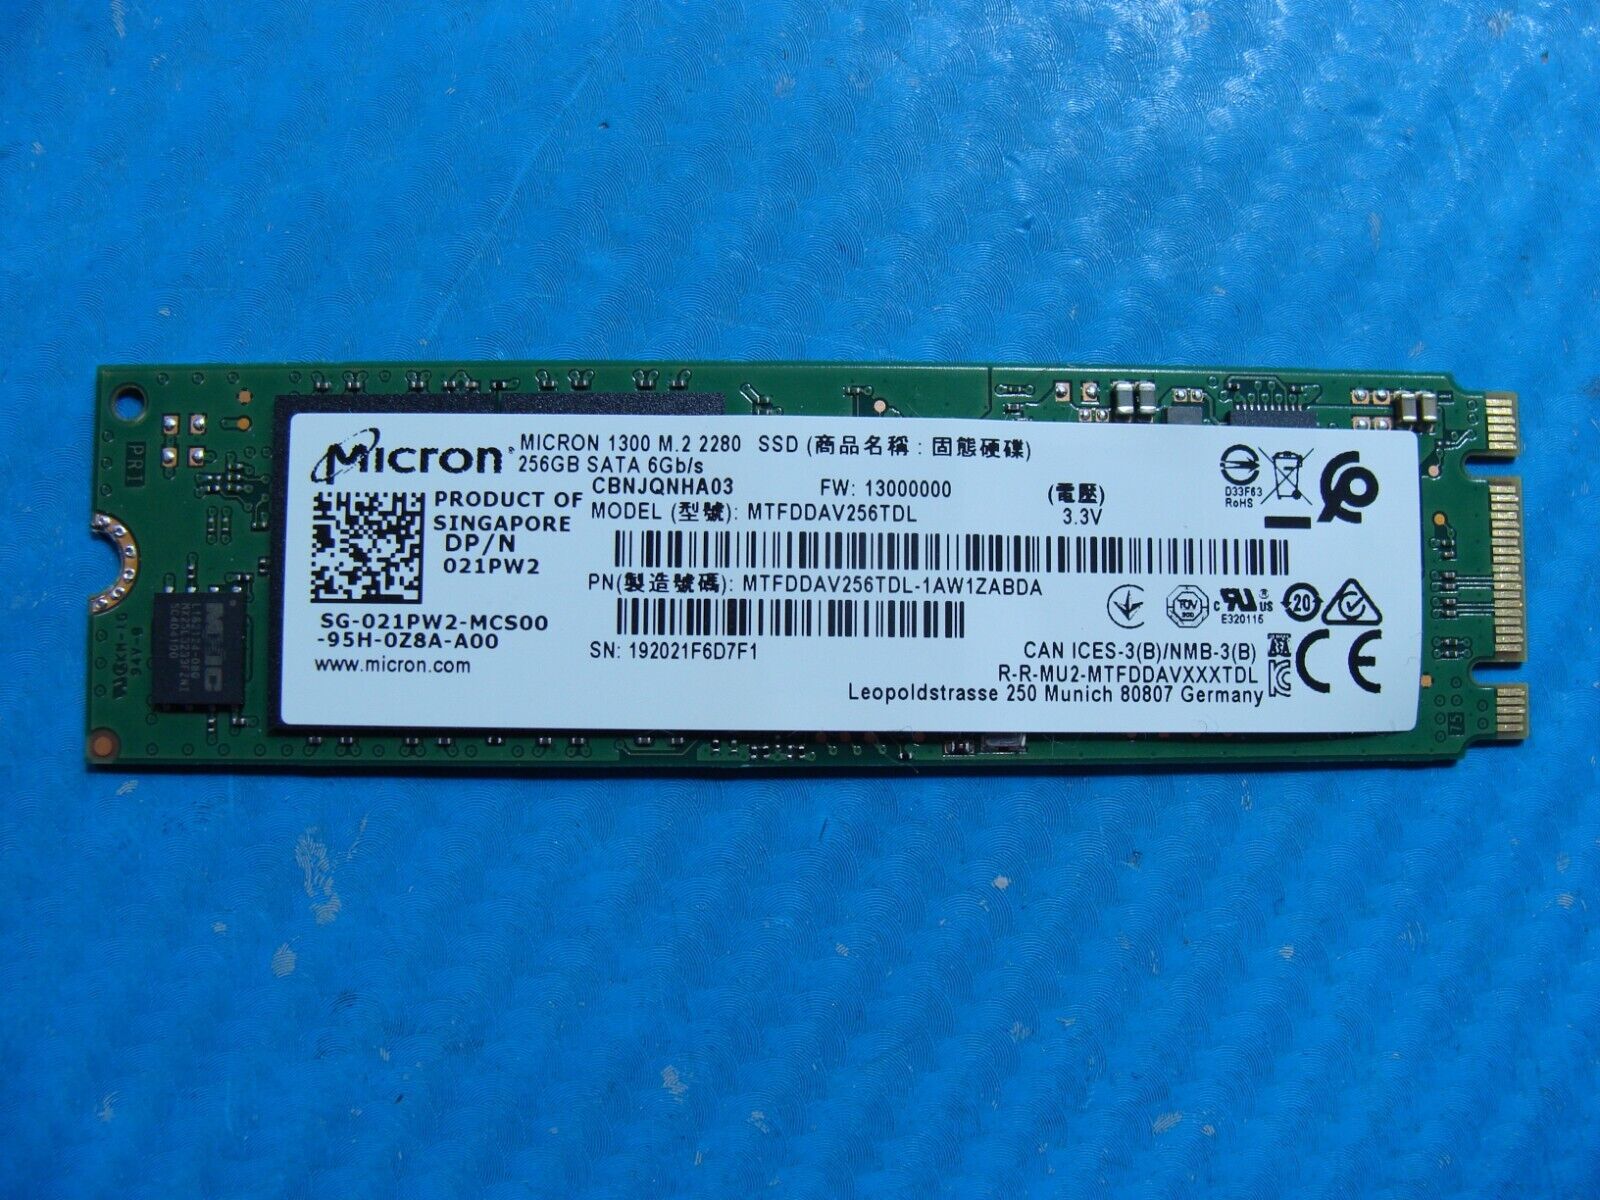 Dell 7490 Micron 256GB SATA M.2 SSD Solid State Drive MTFDDAV256TDL-1AW1ZABDA